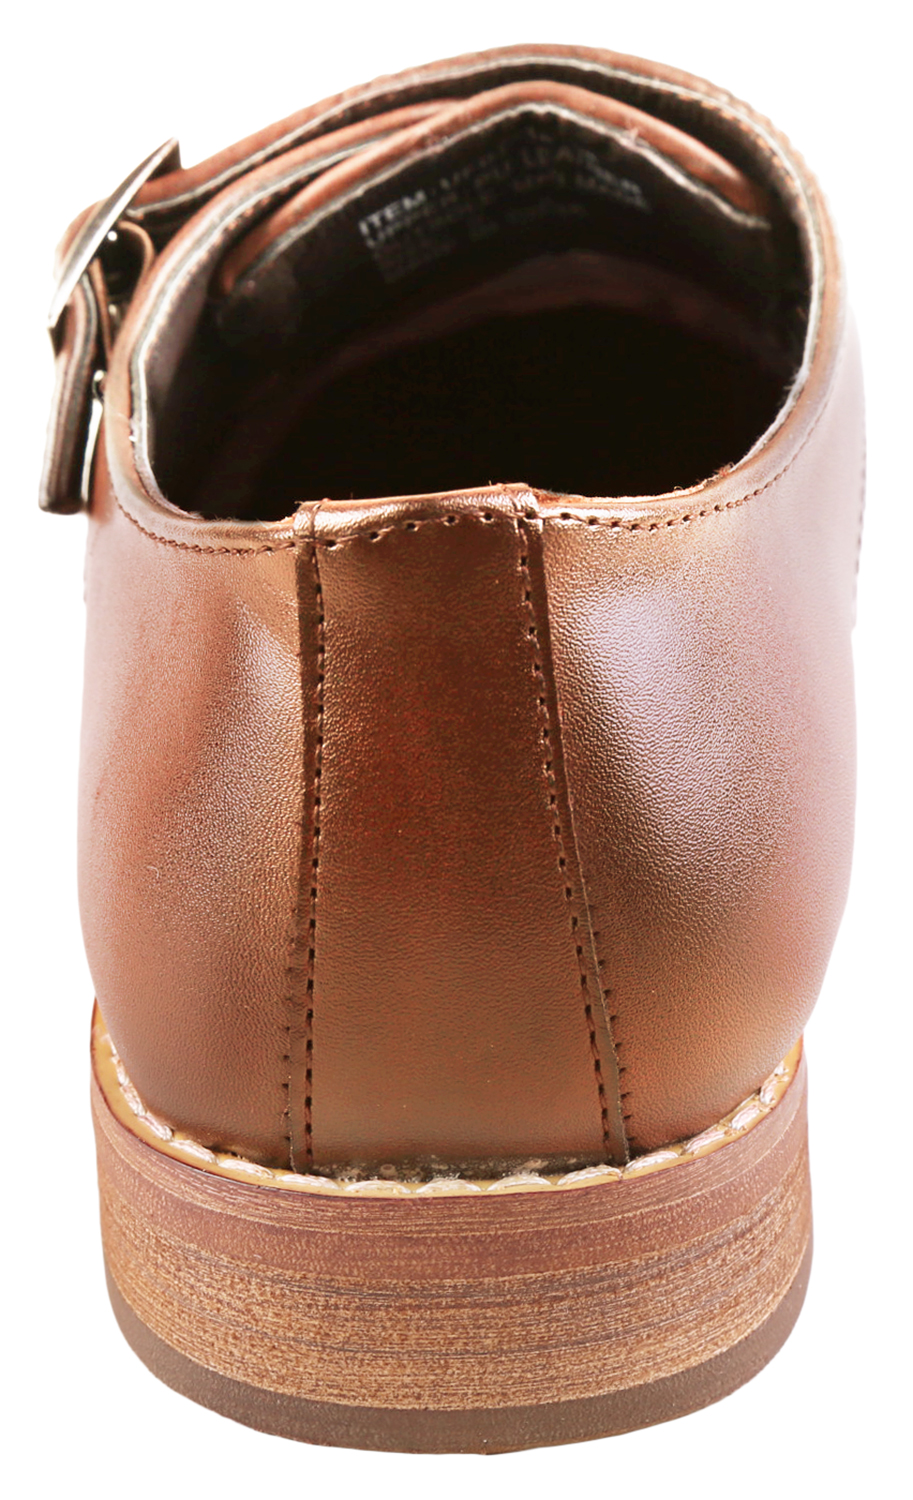 Urban Fox Allen Men's Dress Shoe | Double Monk Strap | Brogue | Wingtip Shoes for Men | Light Brown 10 M US - image 4 of 7